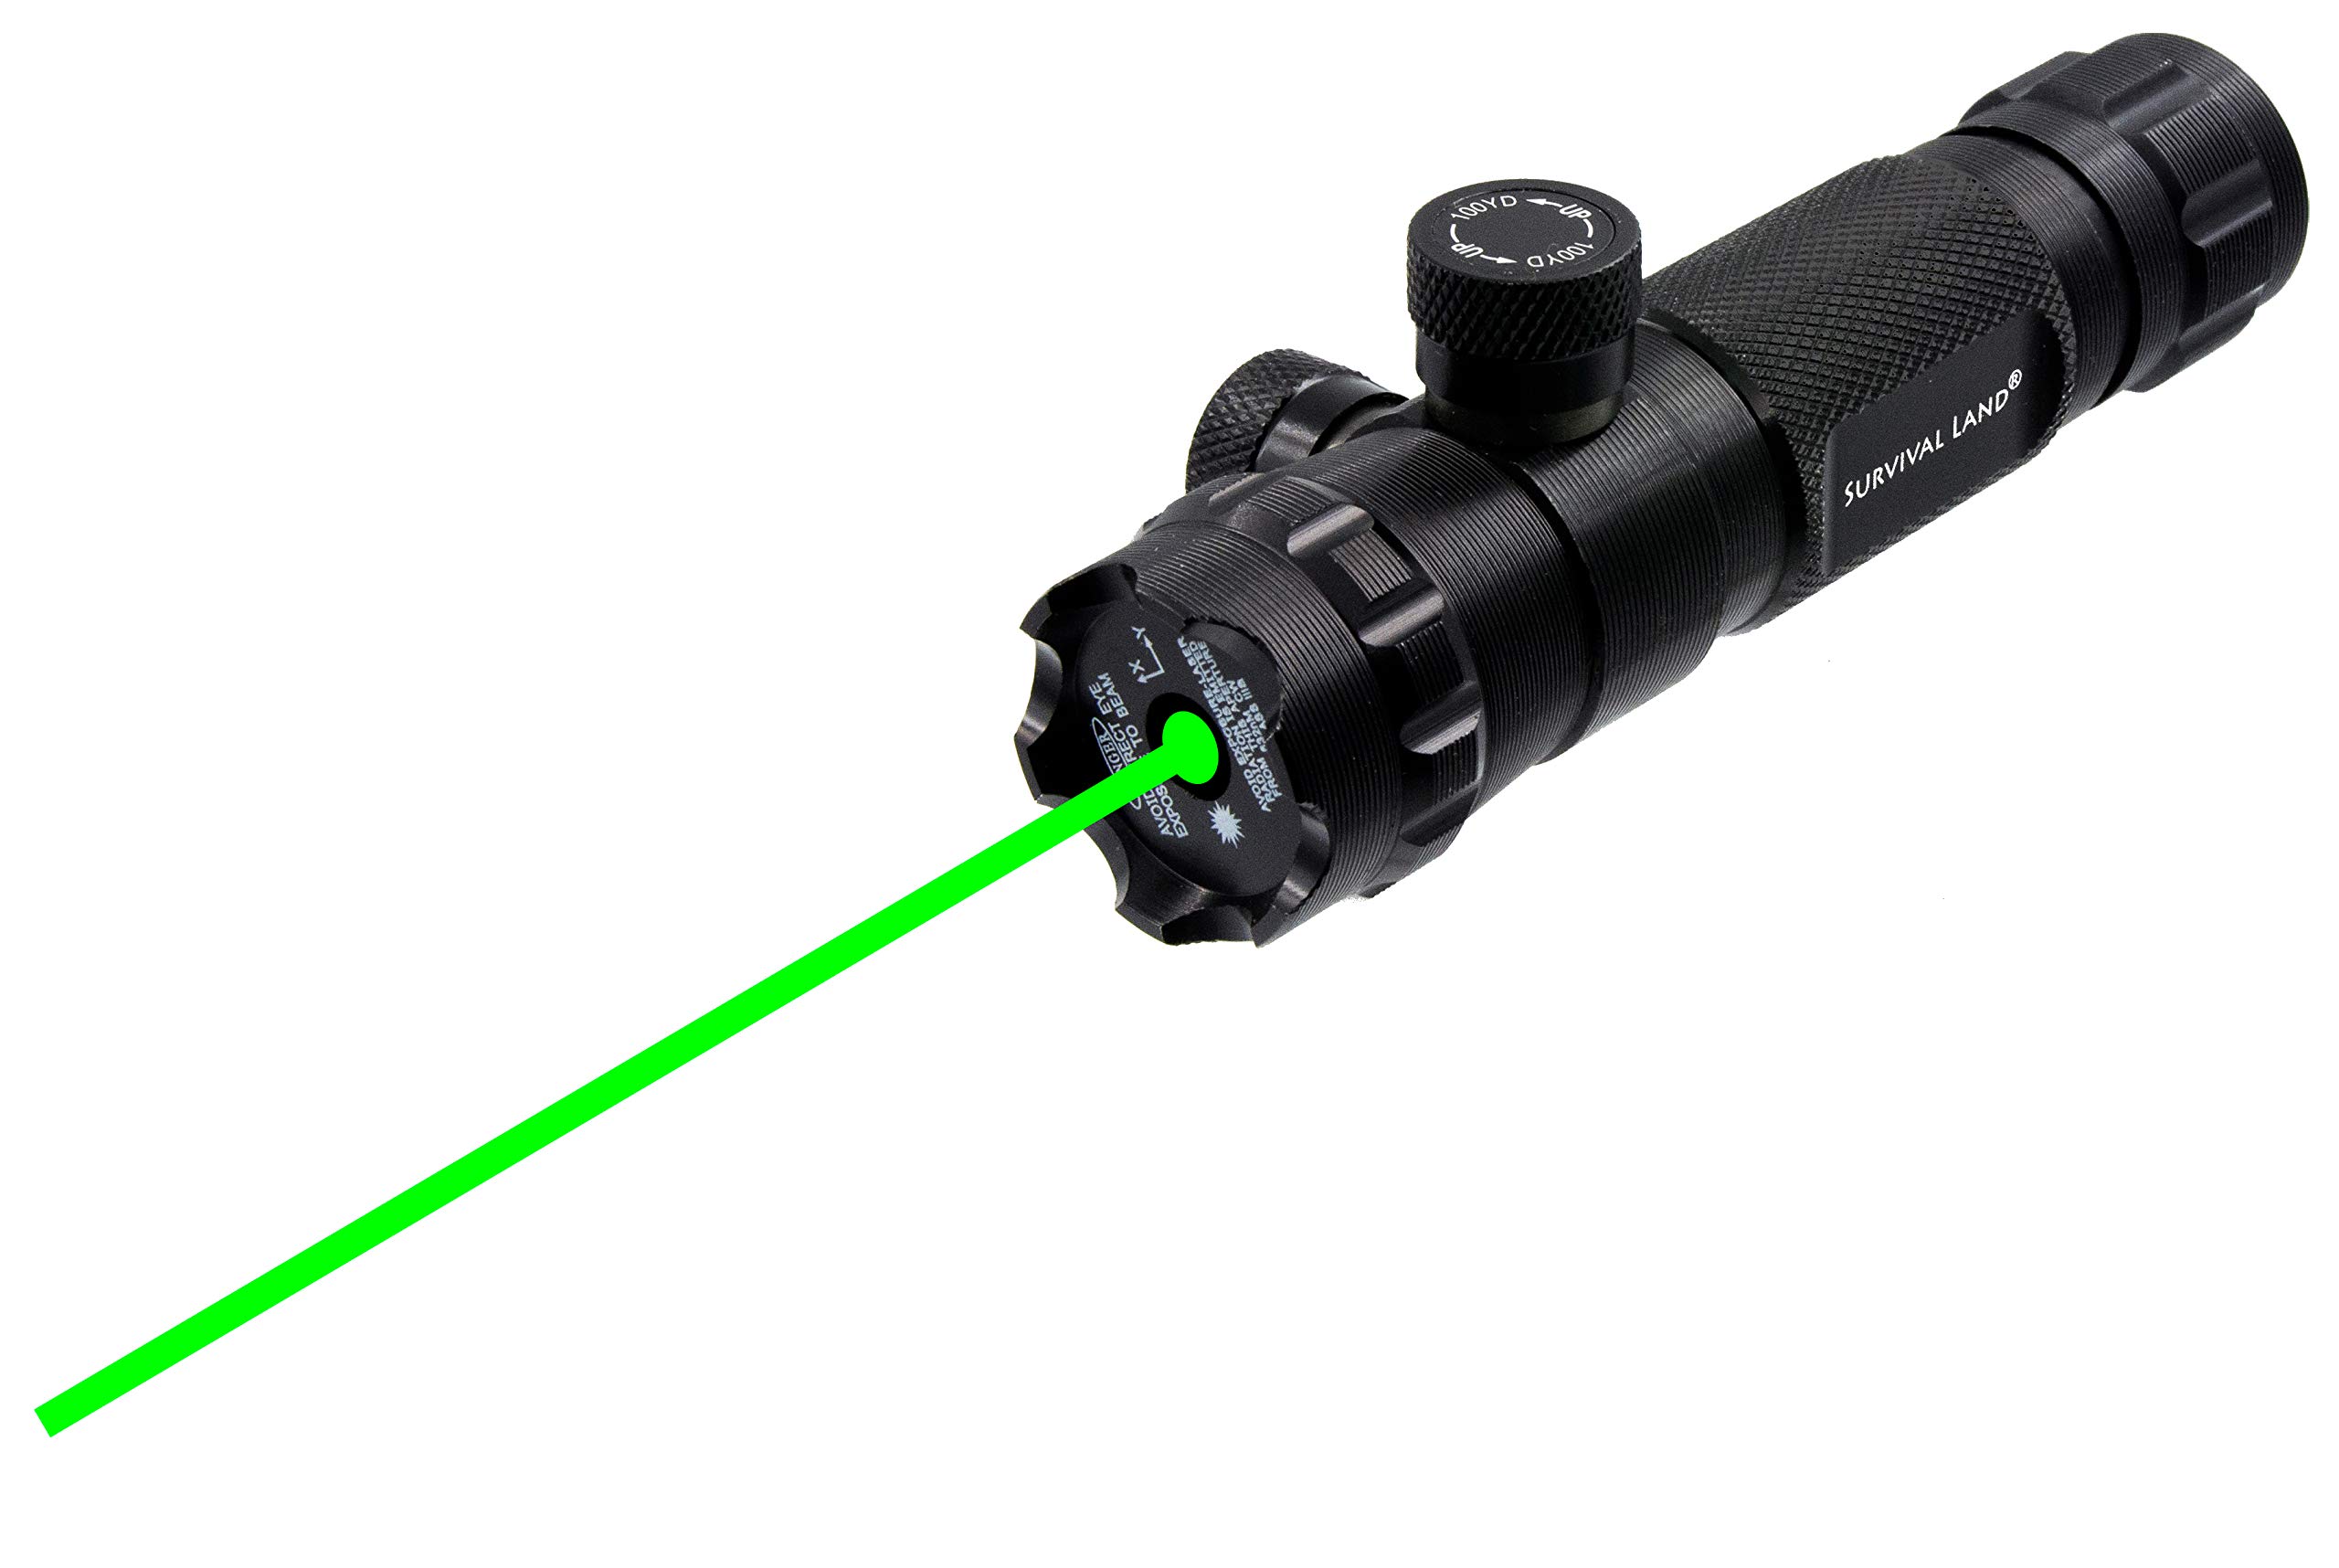 Green Dot Pistol Laser Sight 532nm 5mw Tactical Green Laser Gun Sight Scope  For Picatinny Rail Rifle From Loukang1, $41.85